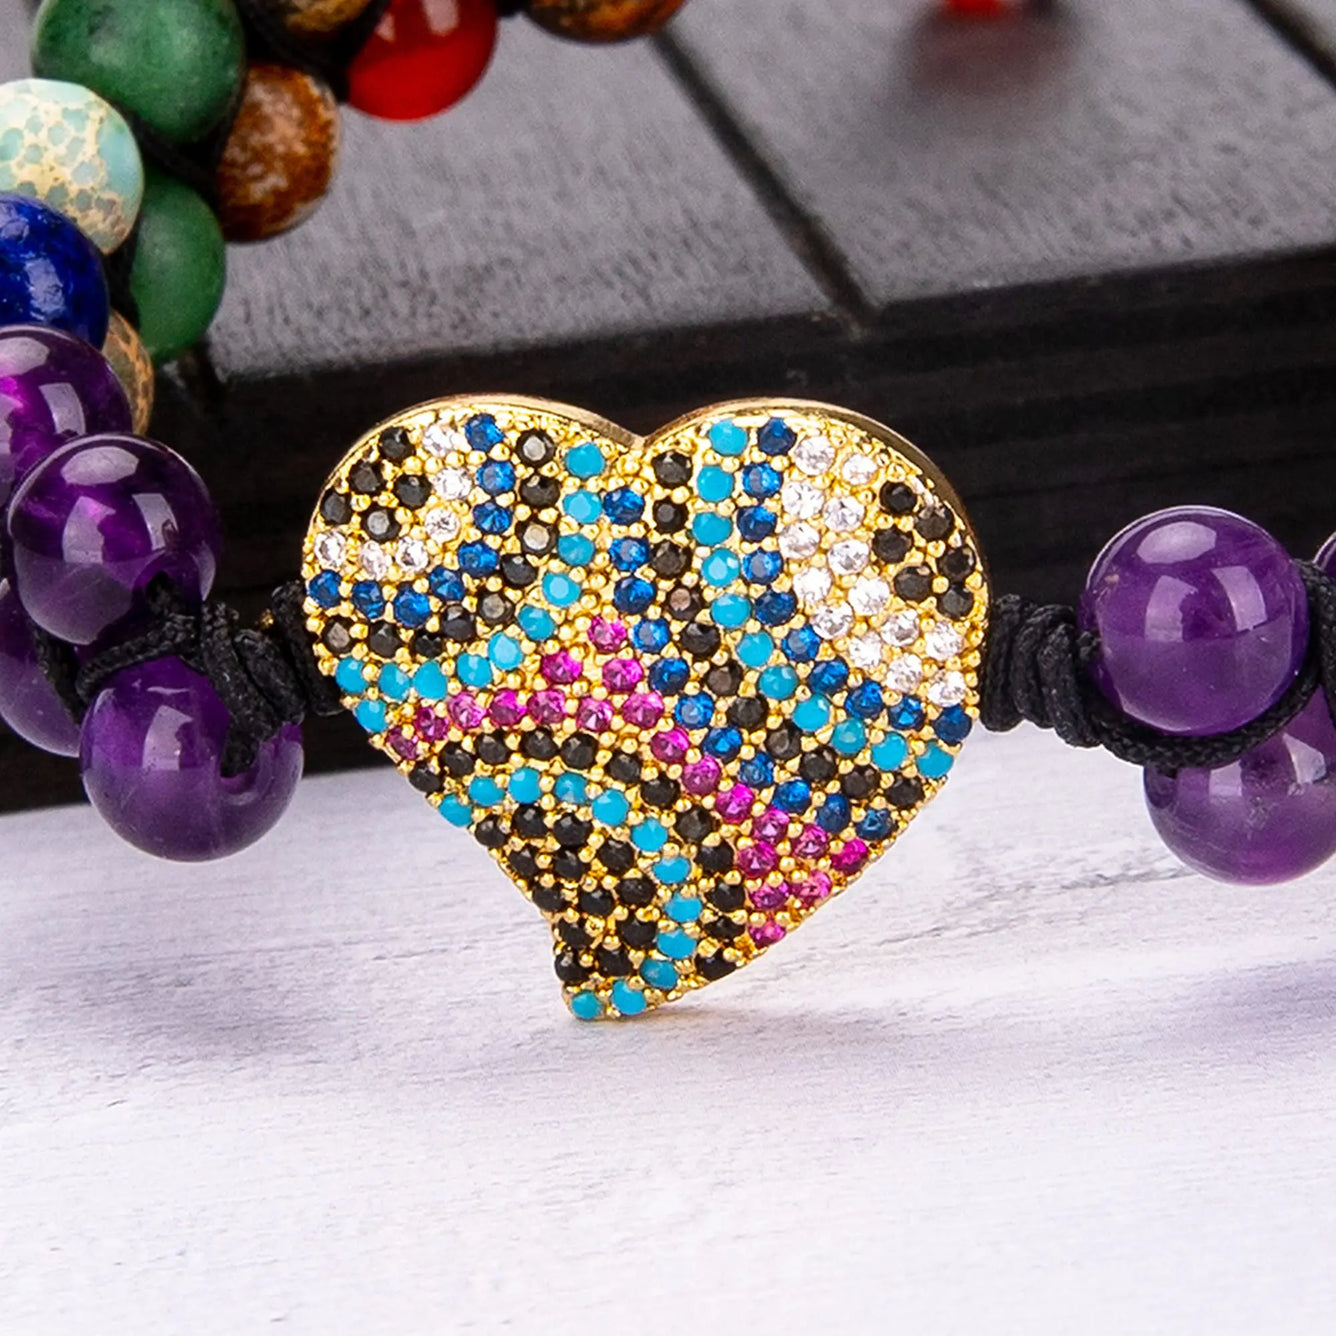 7 Chakra Healing Bracelet with Real Stones Anxiety Meditation Yoga - Heart 6mm Bead Healing Crystal Home